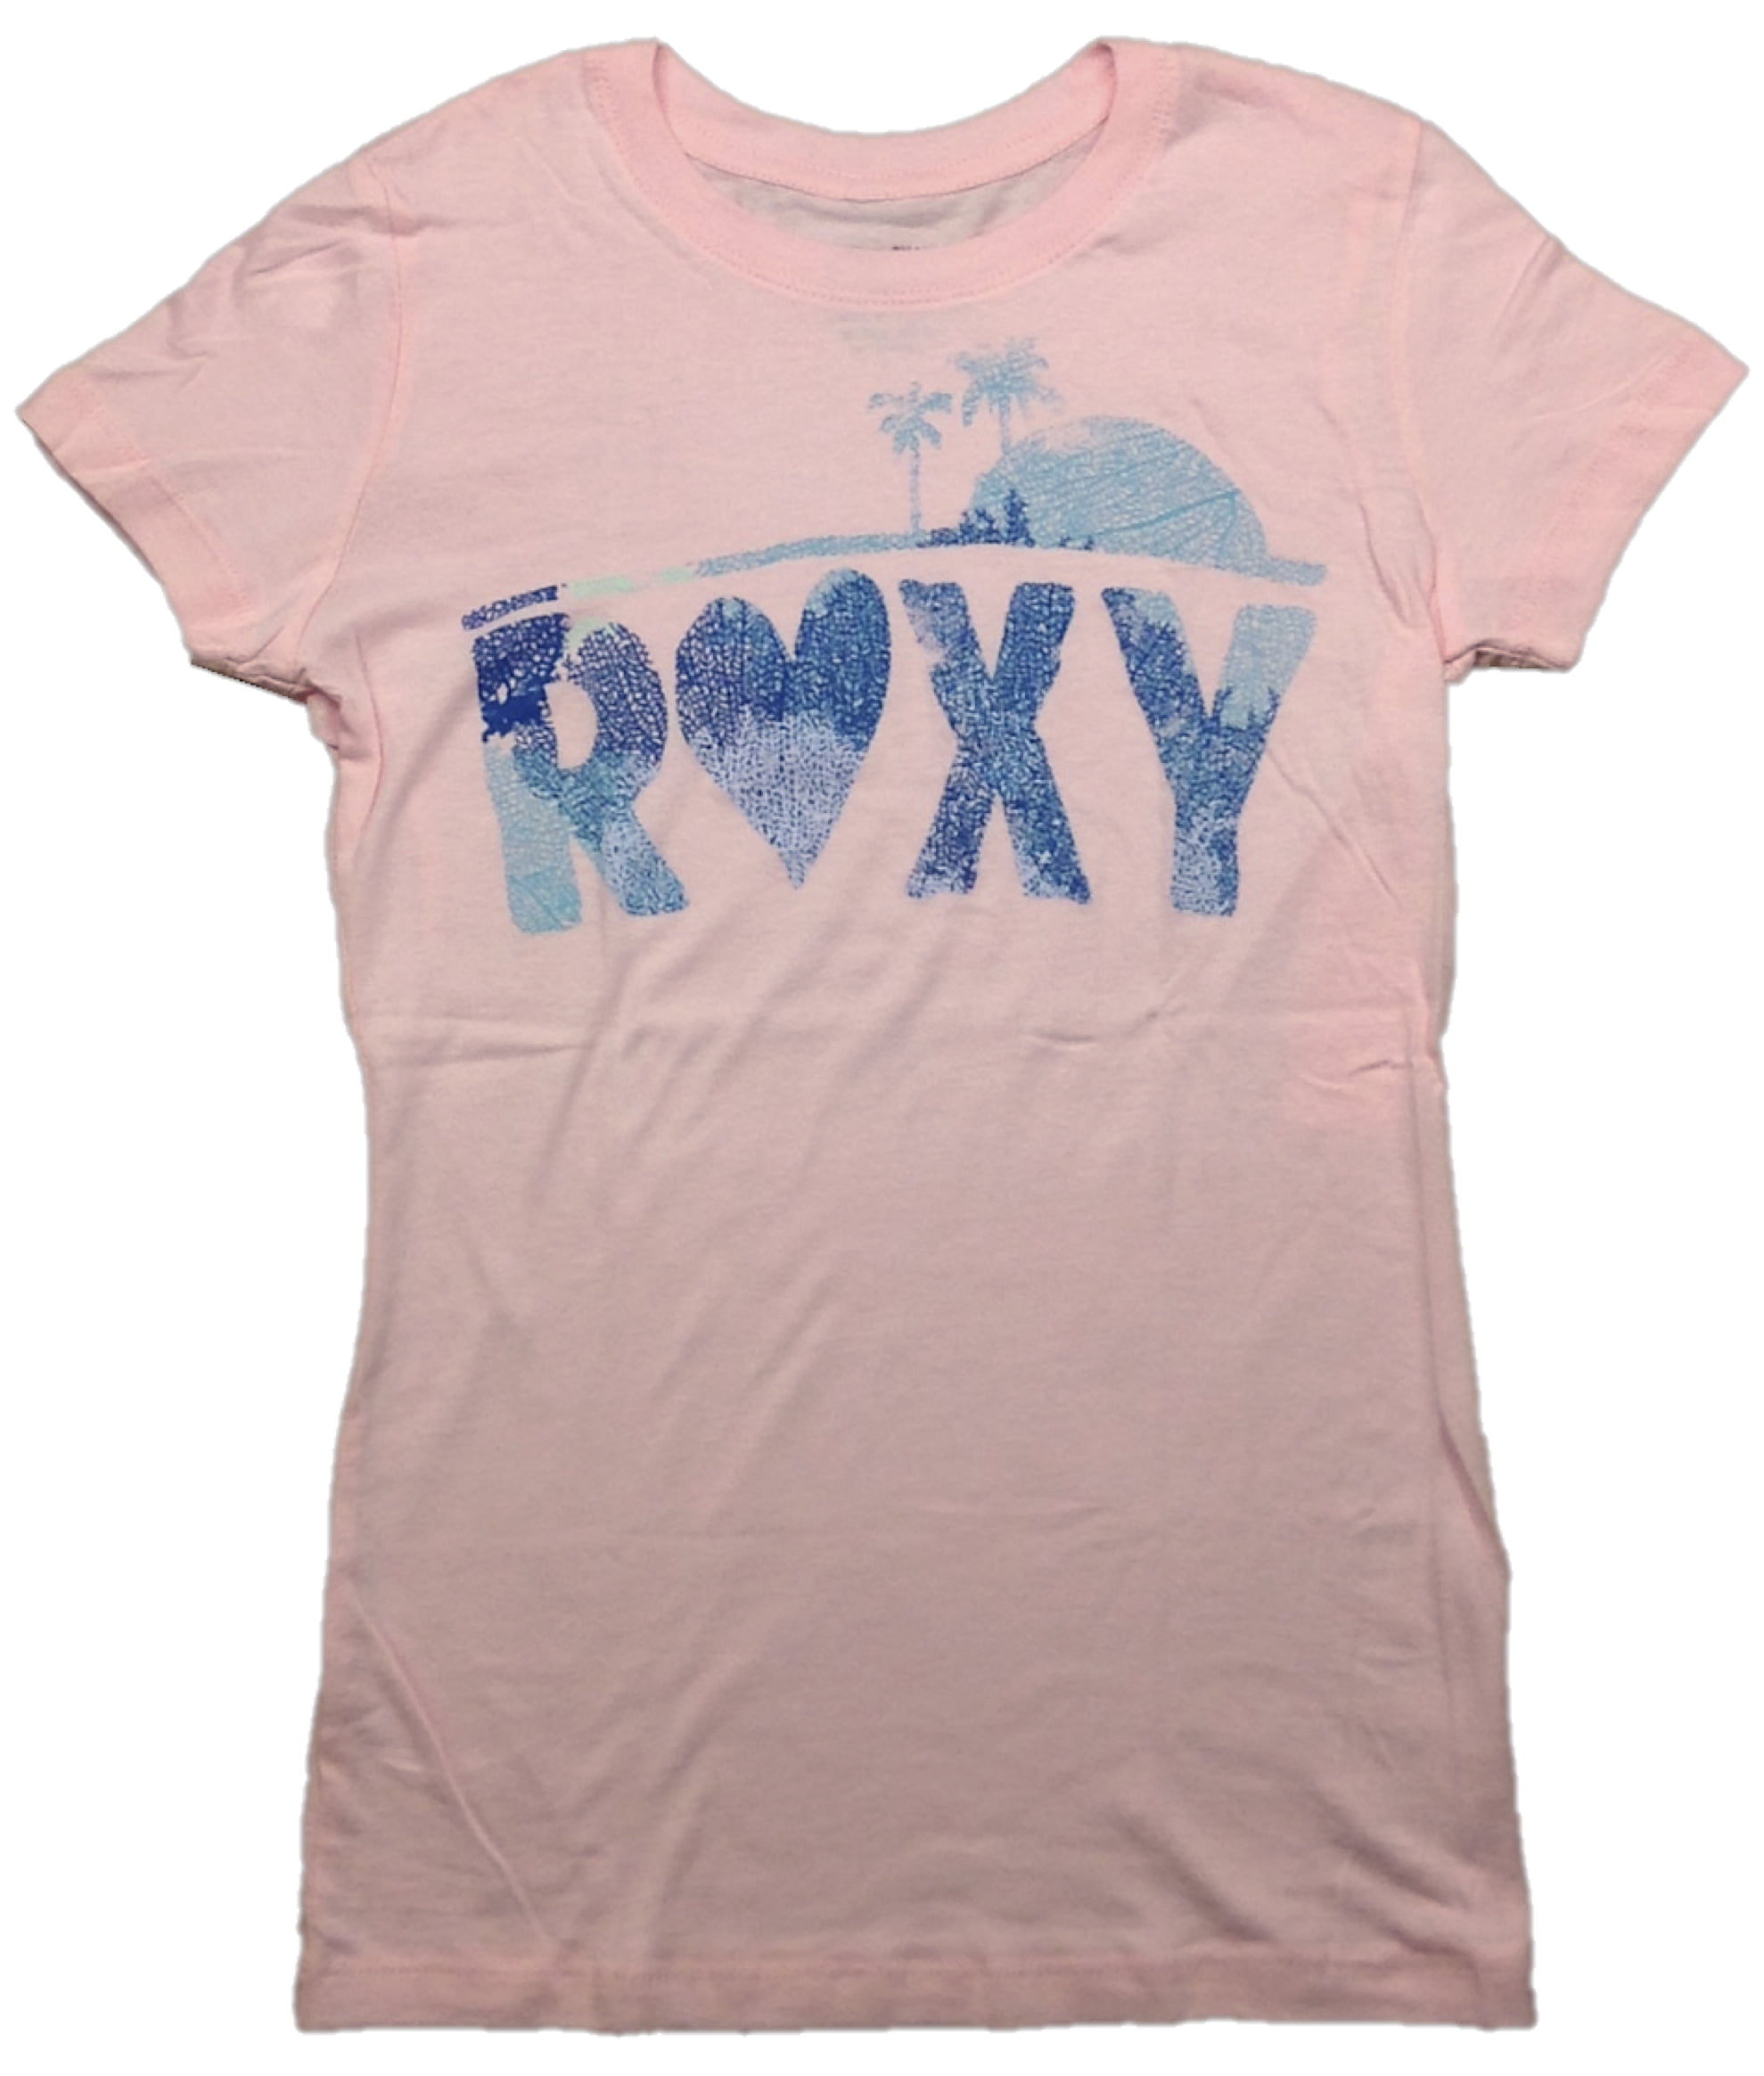 Roxy - Roxy Women's T-Shirt Graphic Logo - Walmart.com - Walmart.com